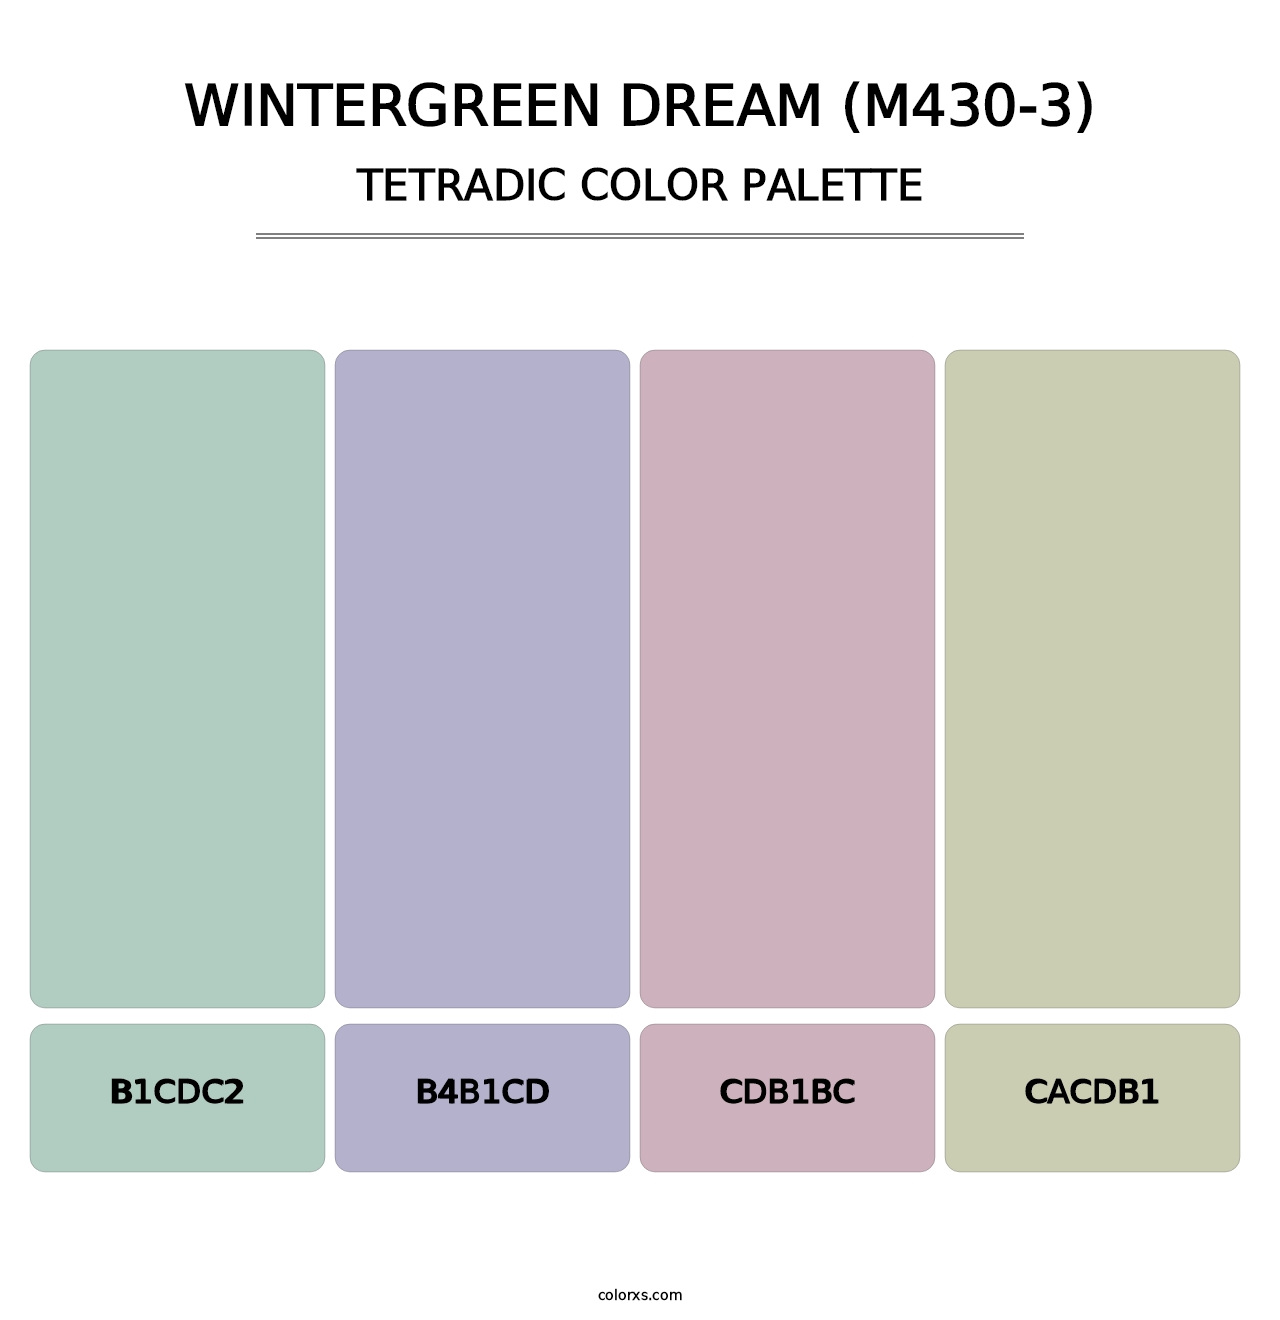 Wintergreen Dream (M430-3) - Tetradic Color Palette